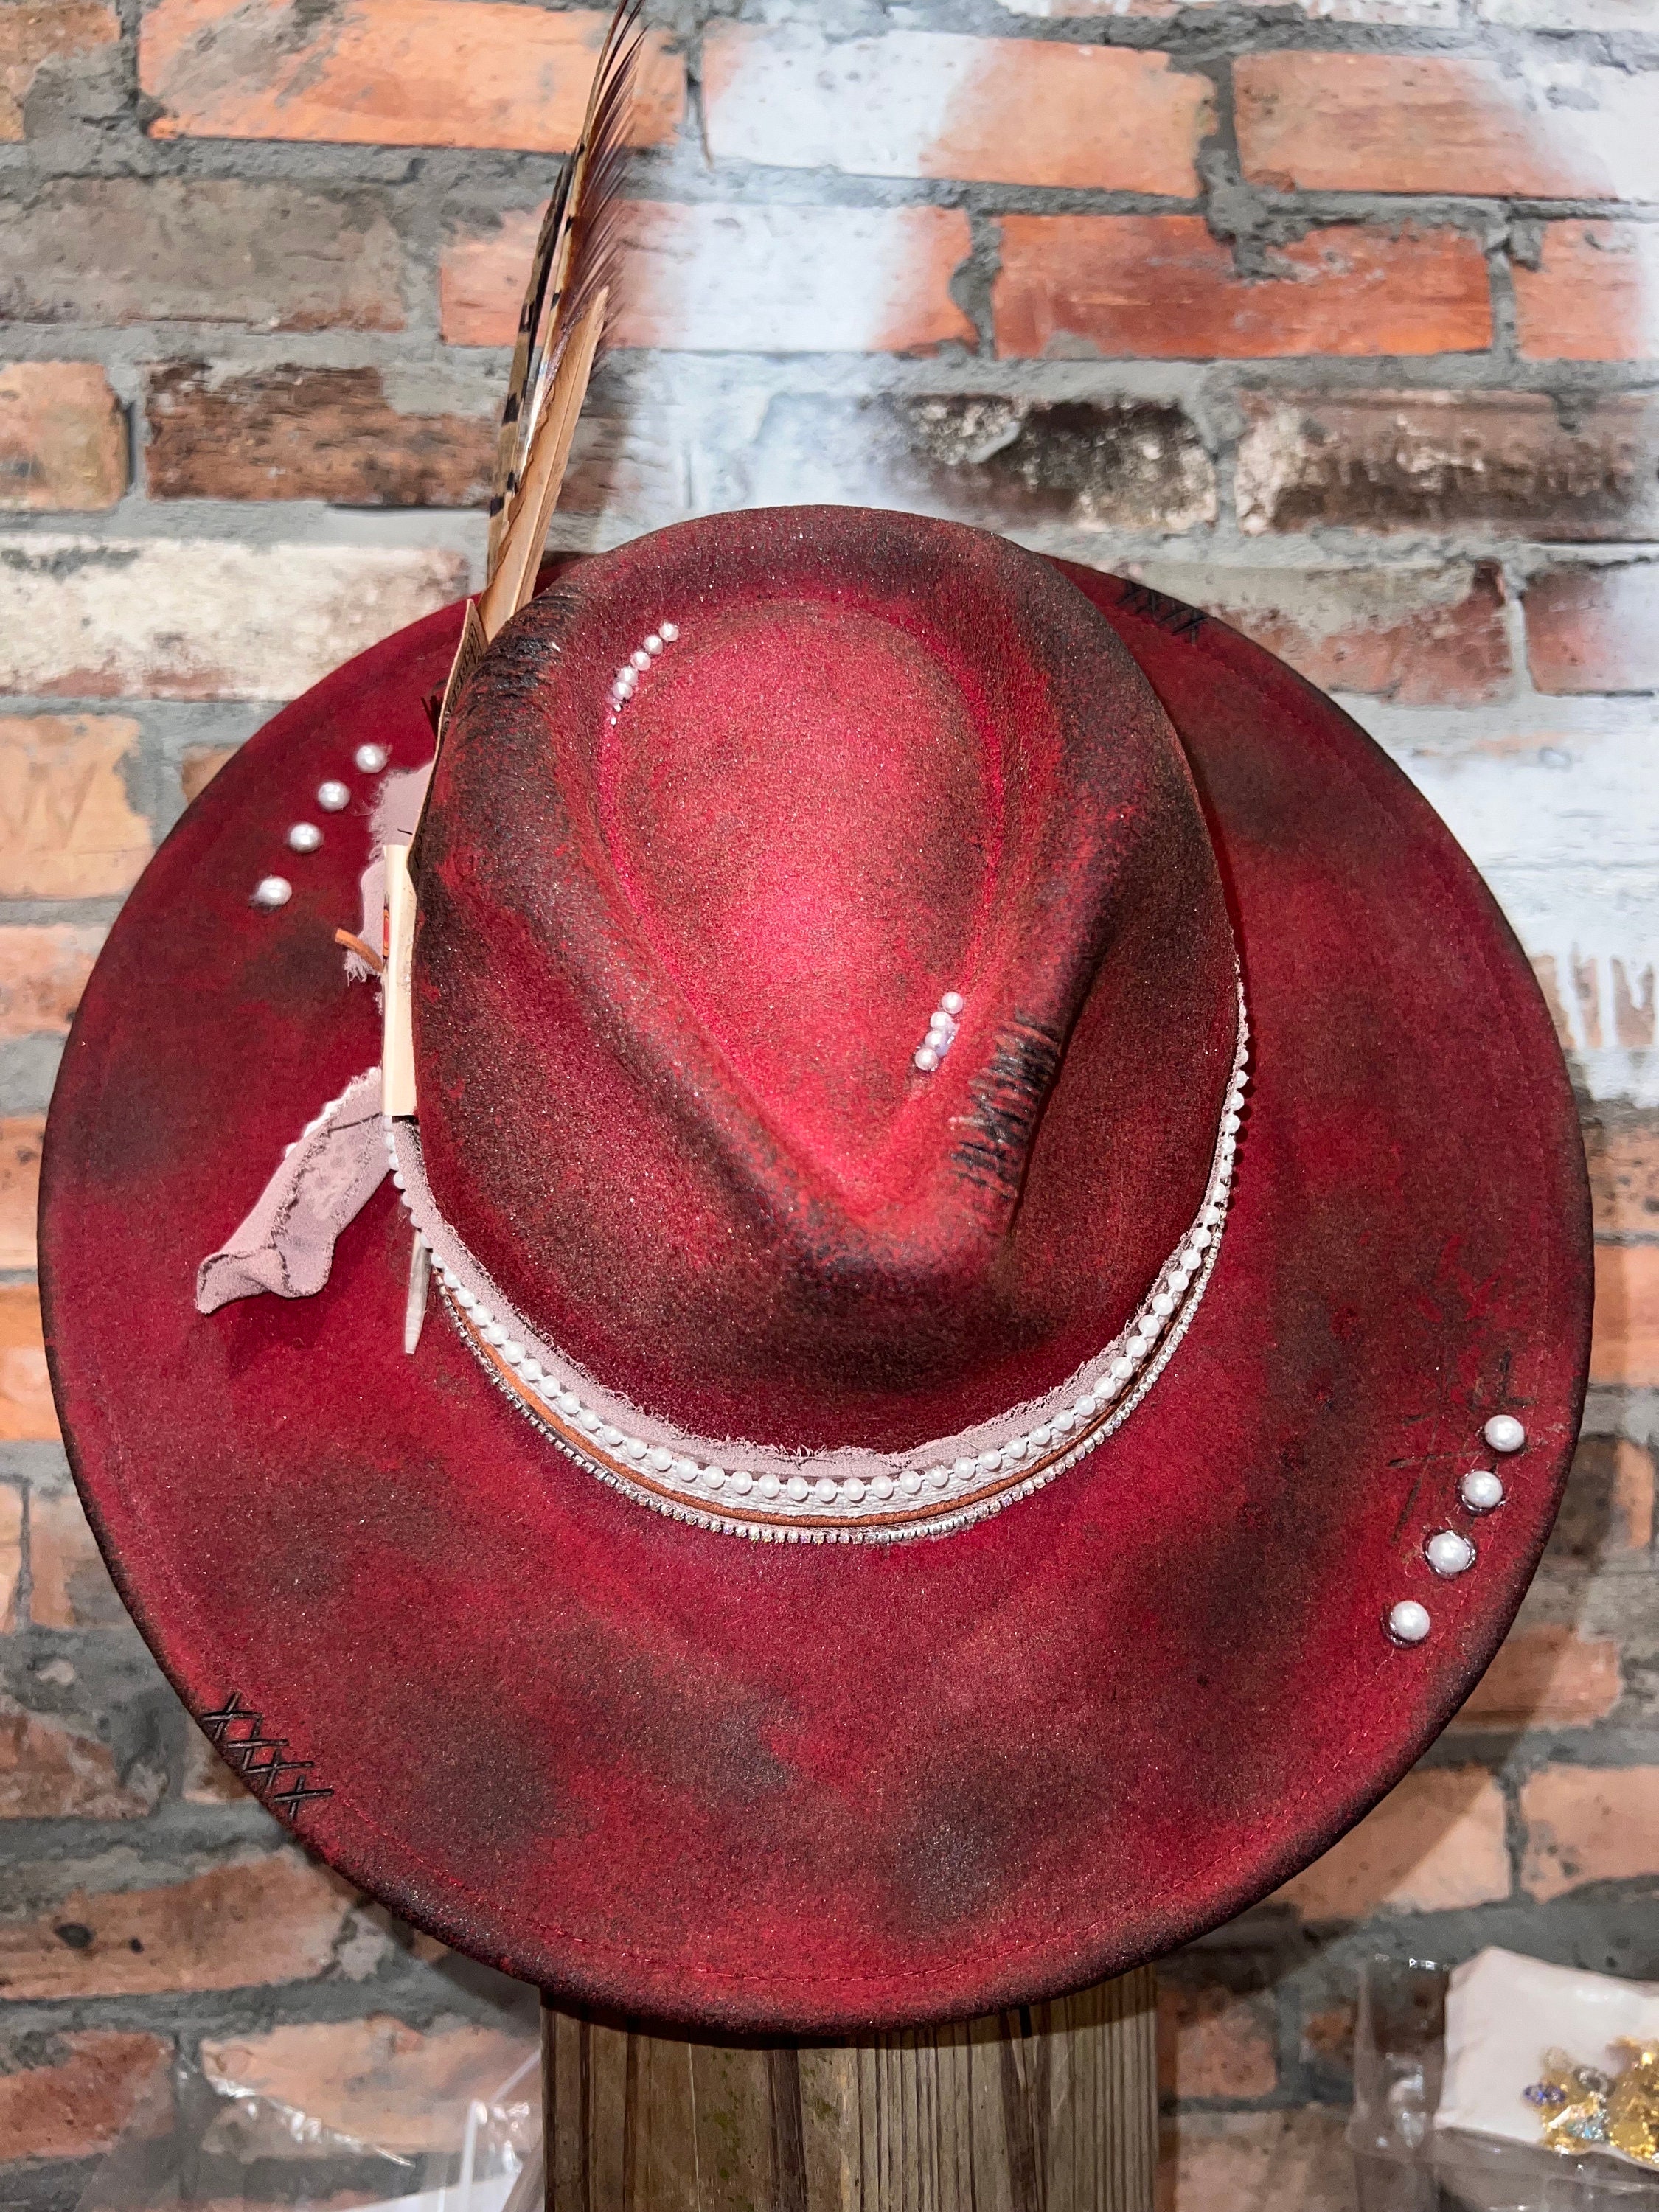 Paul Lashton Tandy Leather Suede Adjustable Hatband for All Brimmed Fedora Porkpie Cowboy Top Panama Wool Felt Hats